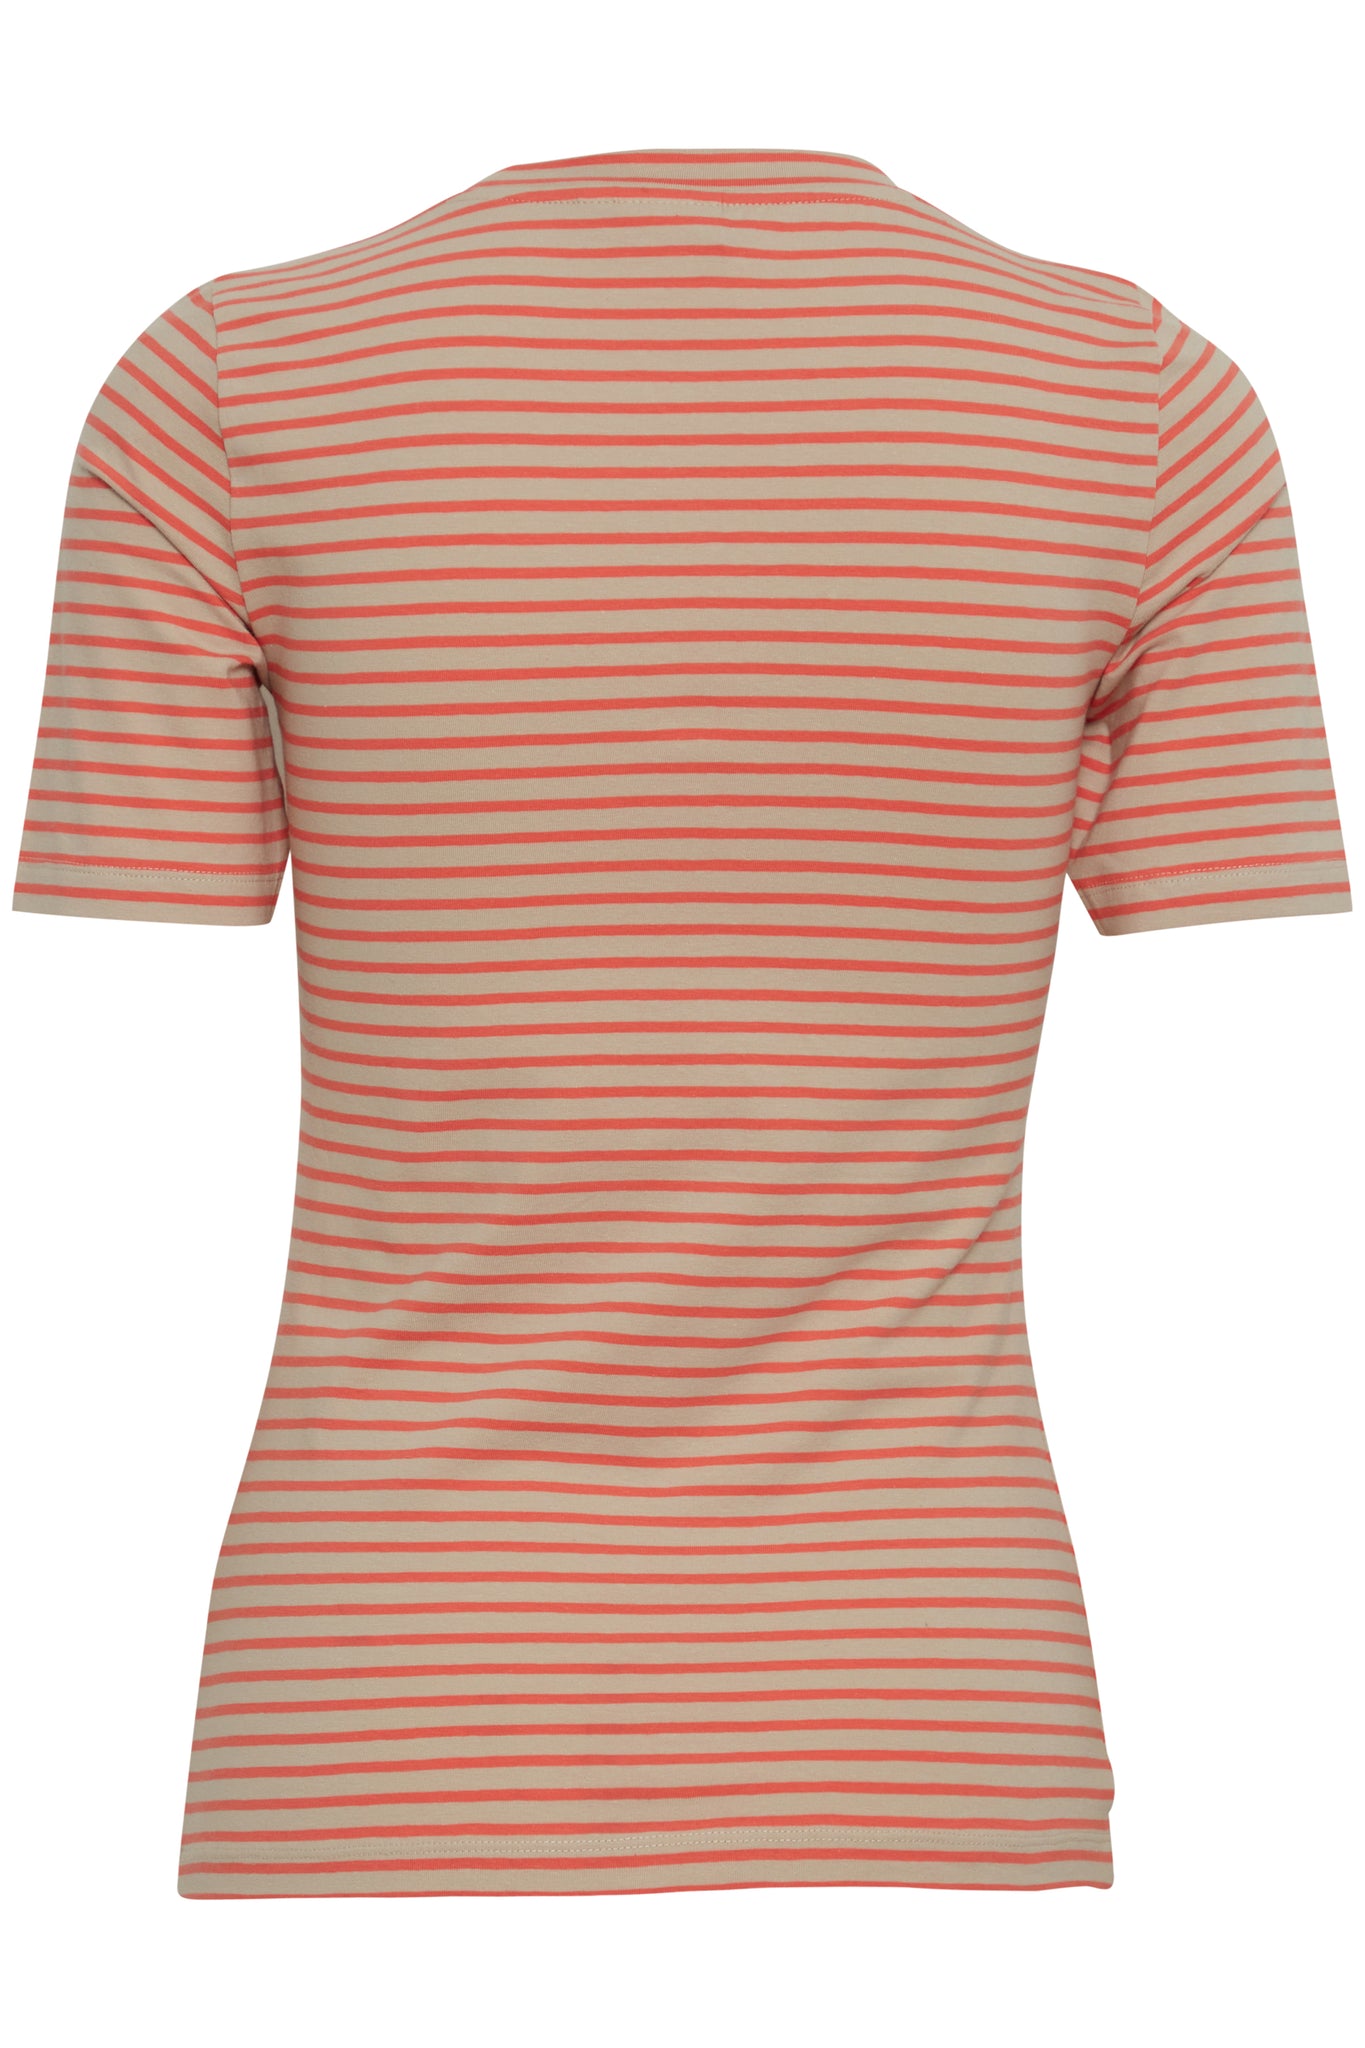 Camiseta ICHI Mira Hot Coral Stripes